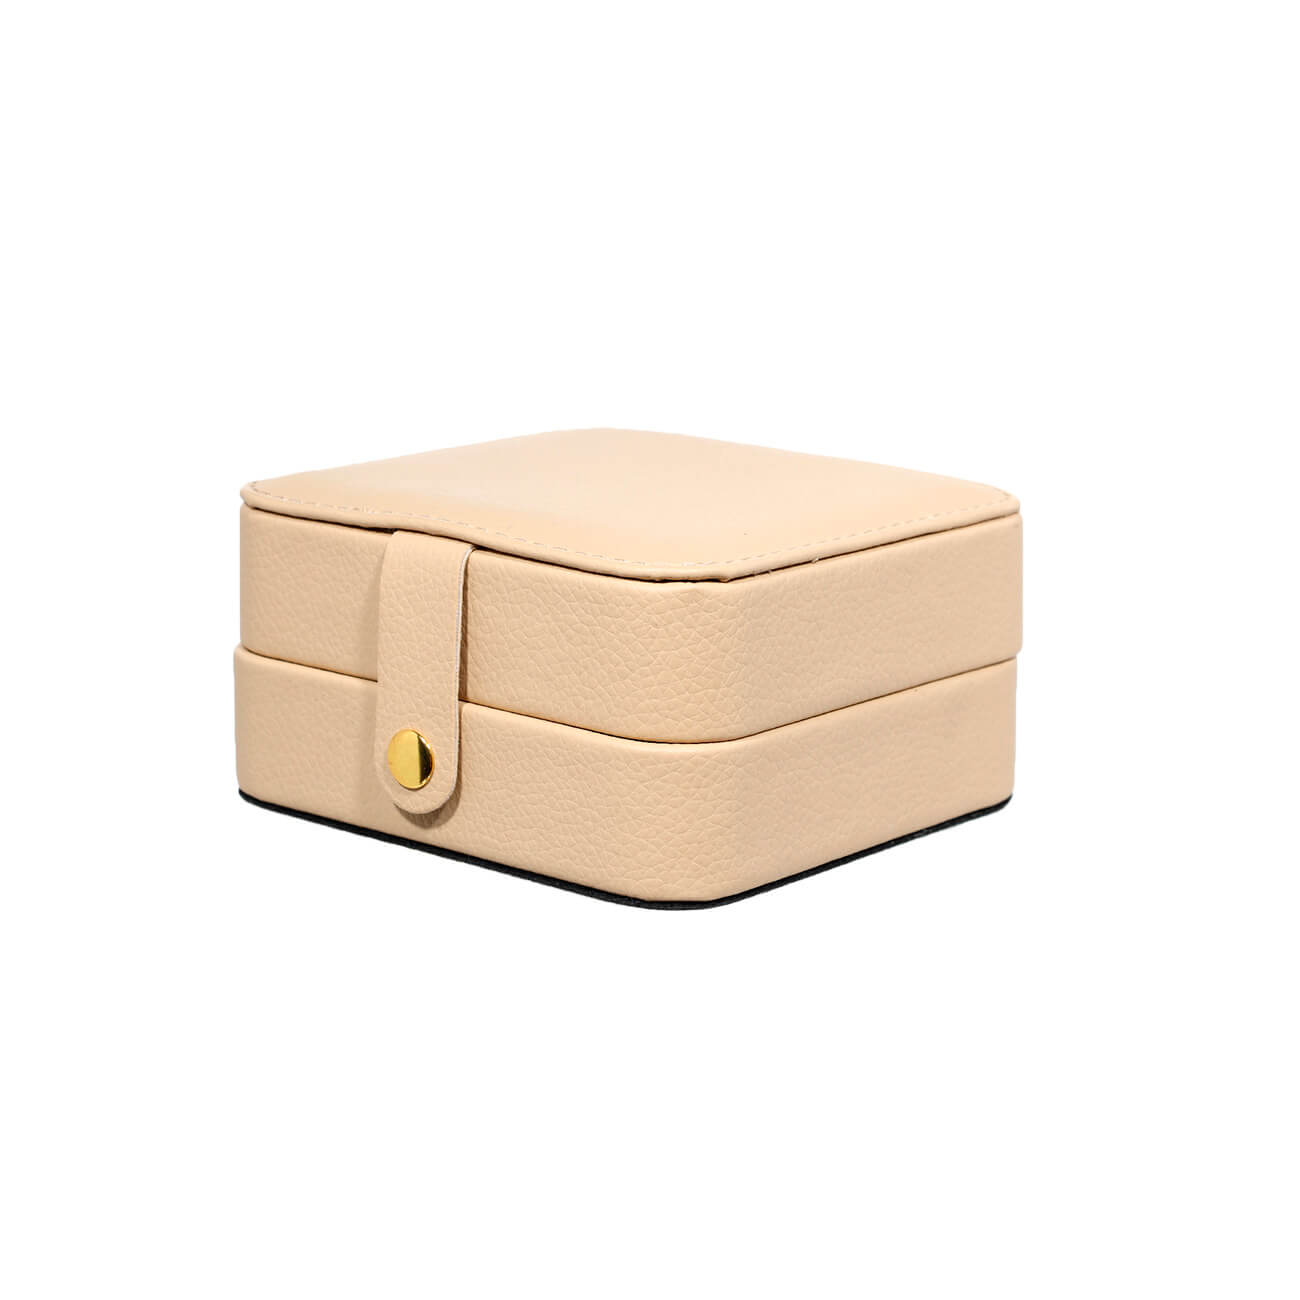 Jewelry box, 11x11 cm, PU leather / MDF, beige, Premiere beige изображение № 1